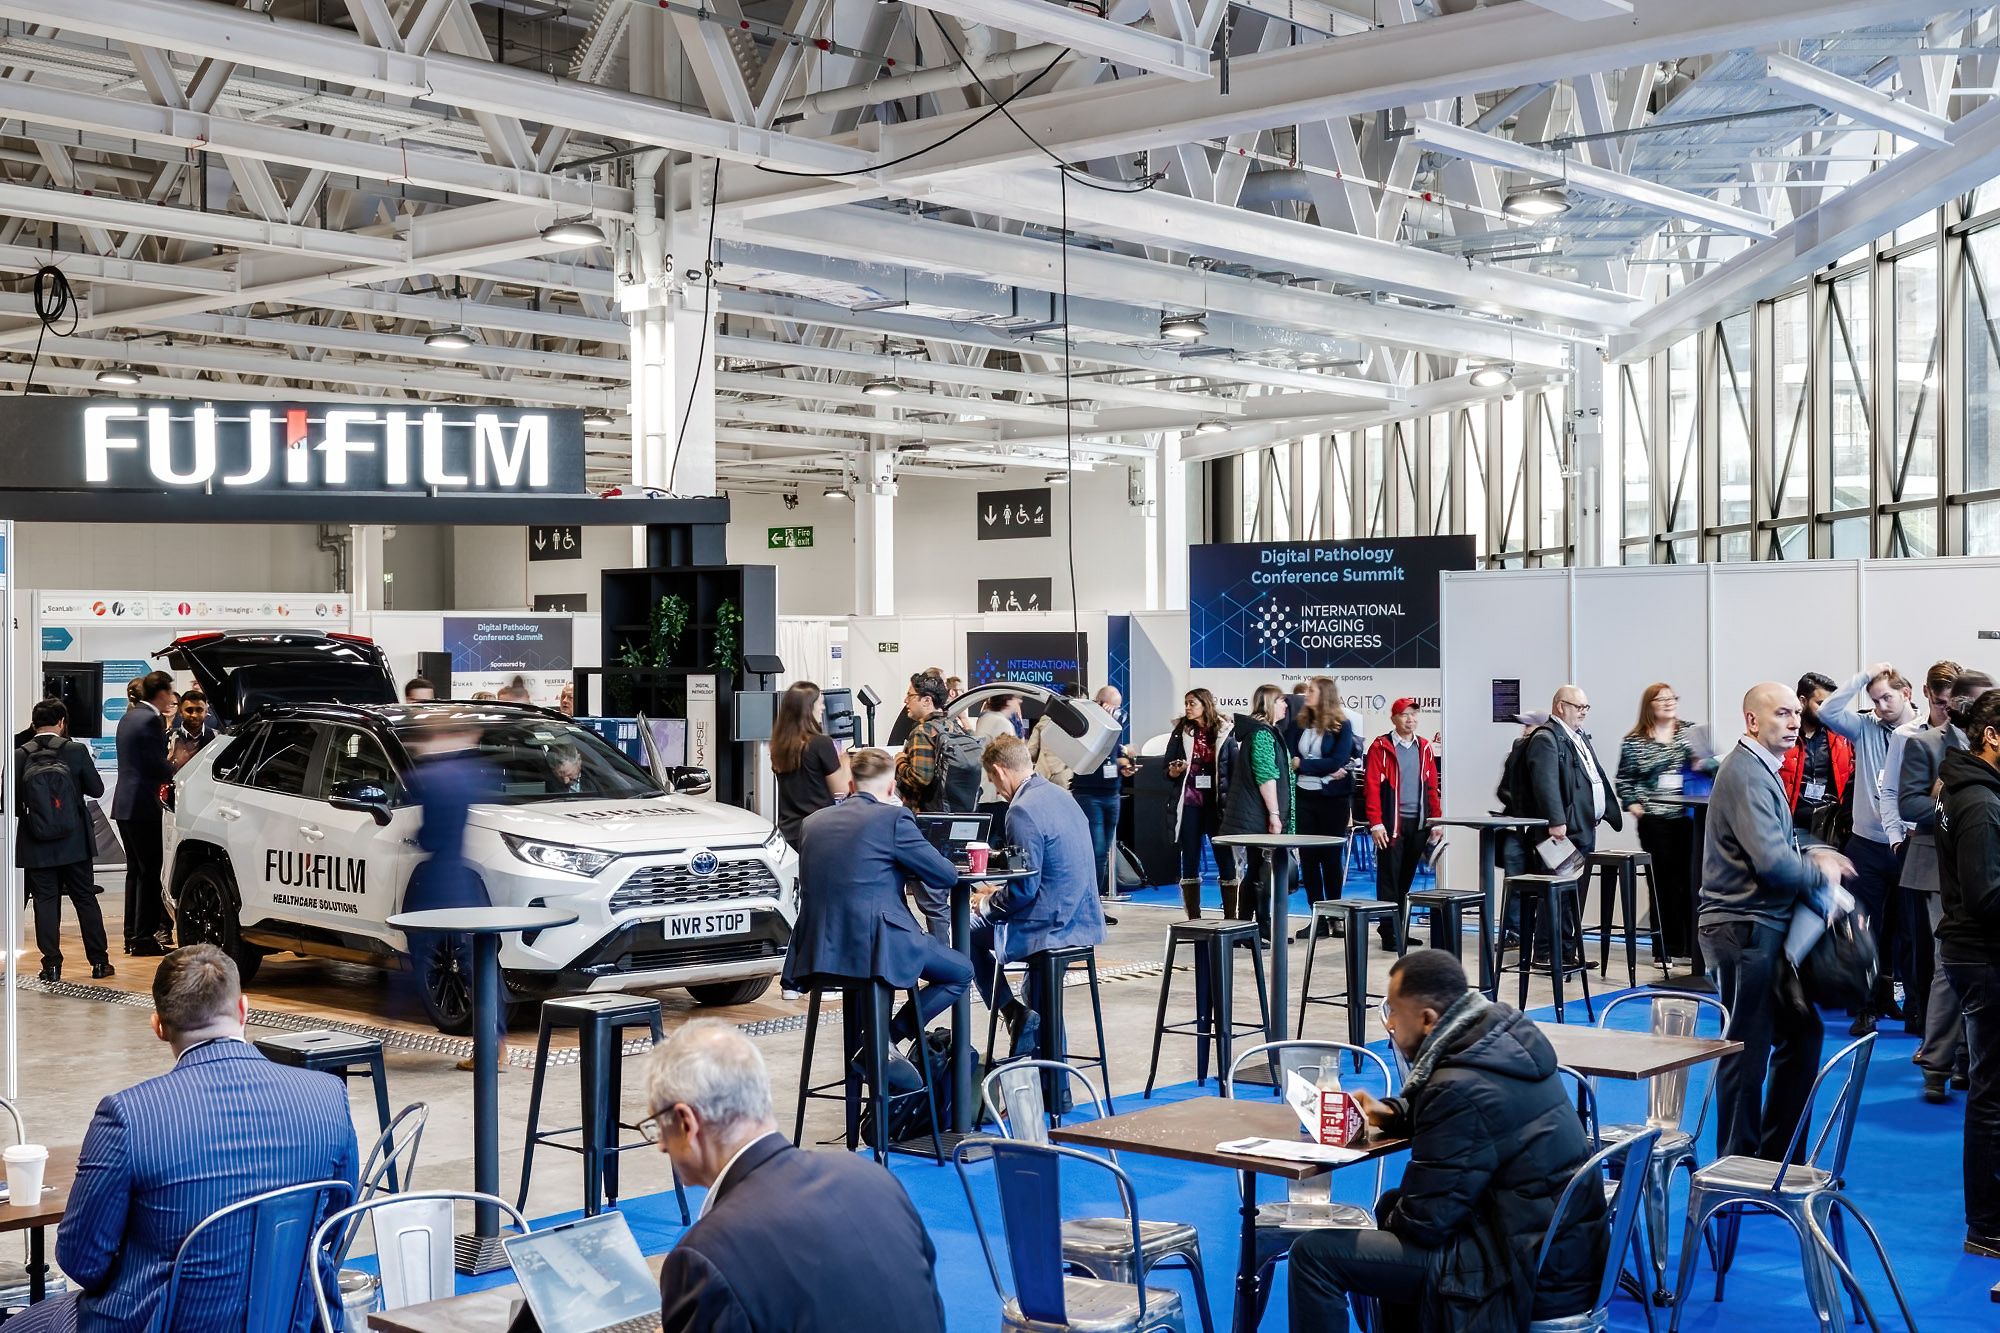 Fujifilm stand at International Imaging Congress